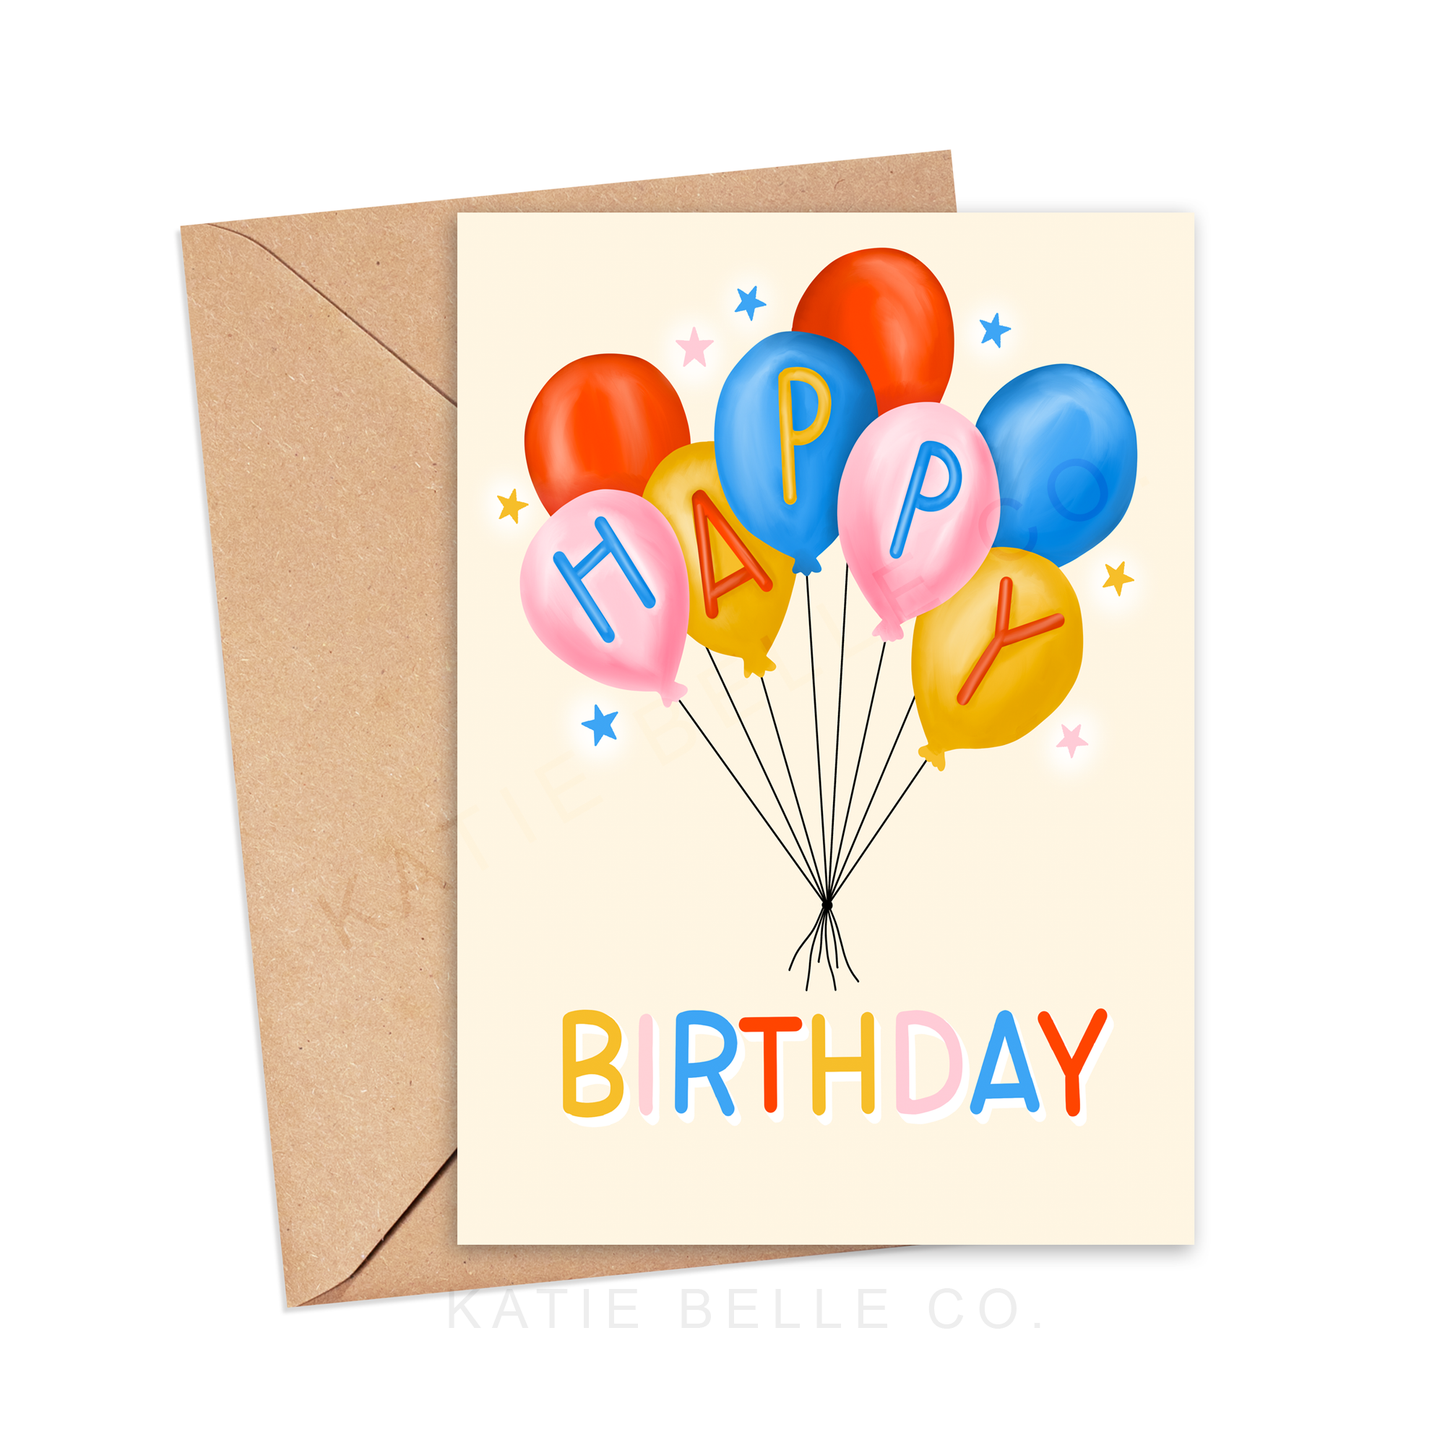 Buy Greeting Card - Happy Birthday